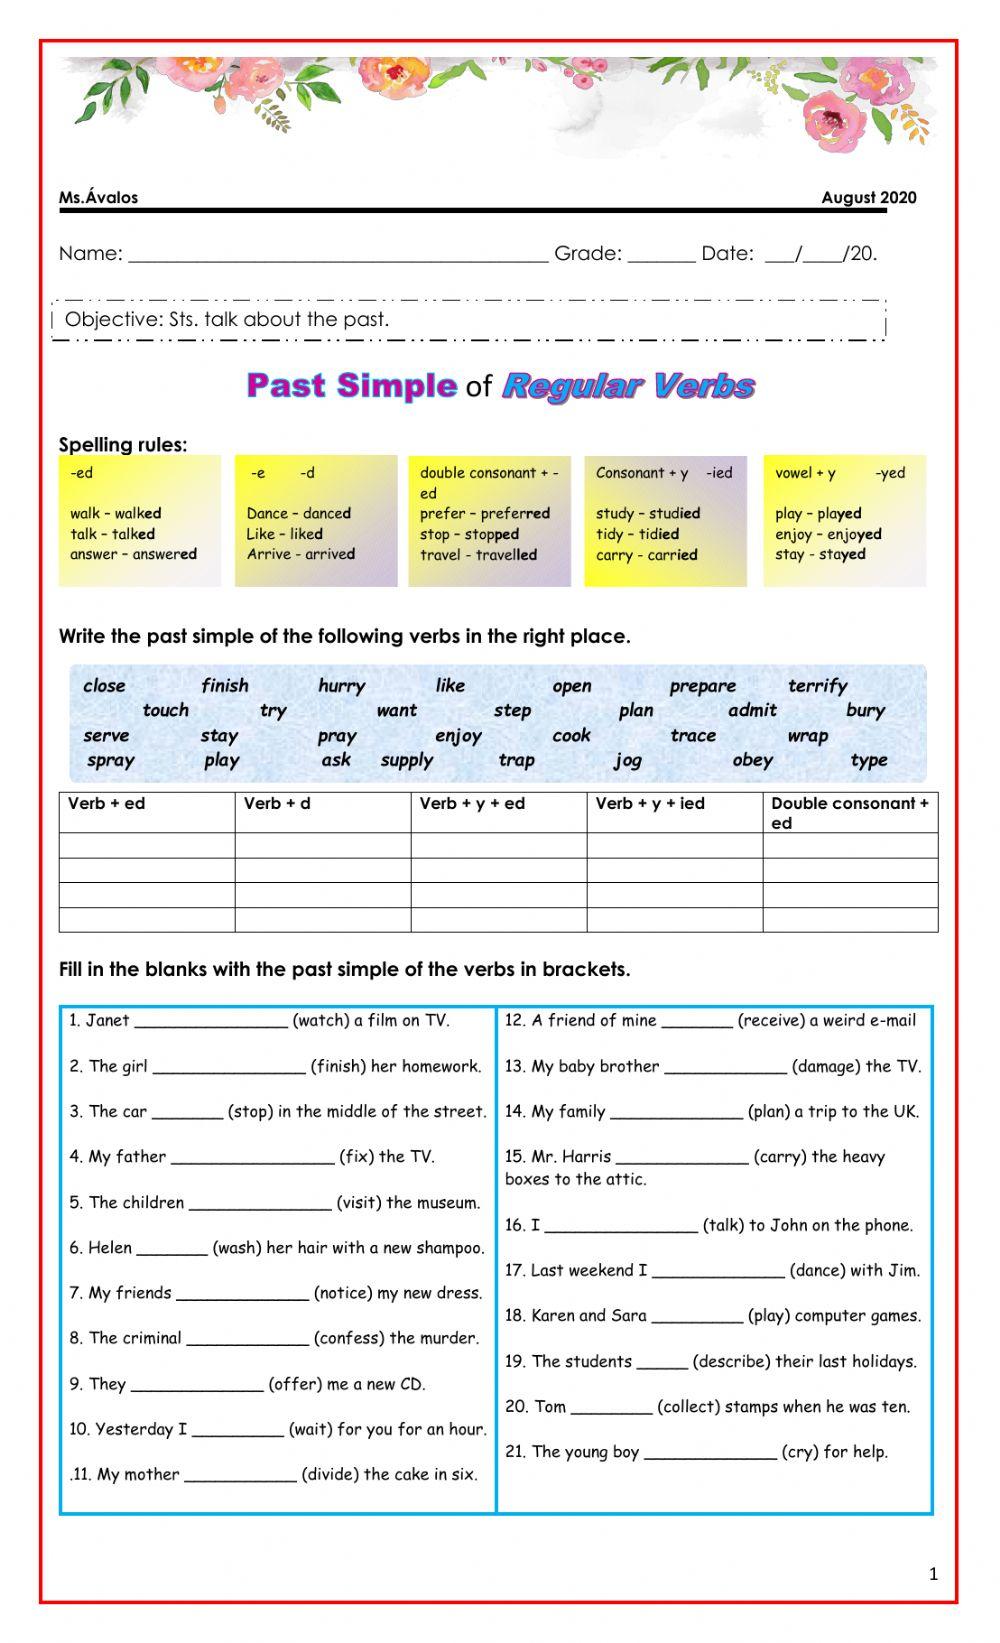 Past simple regular verbs